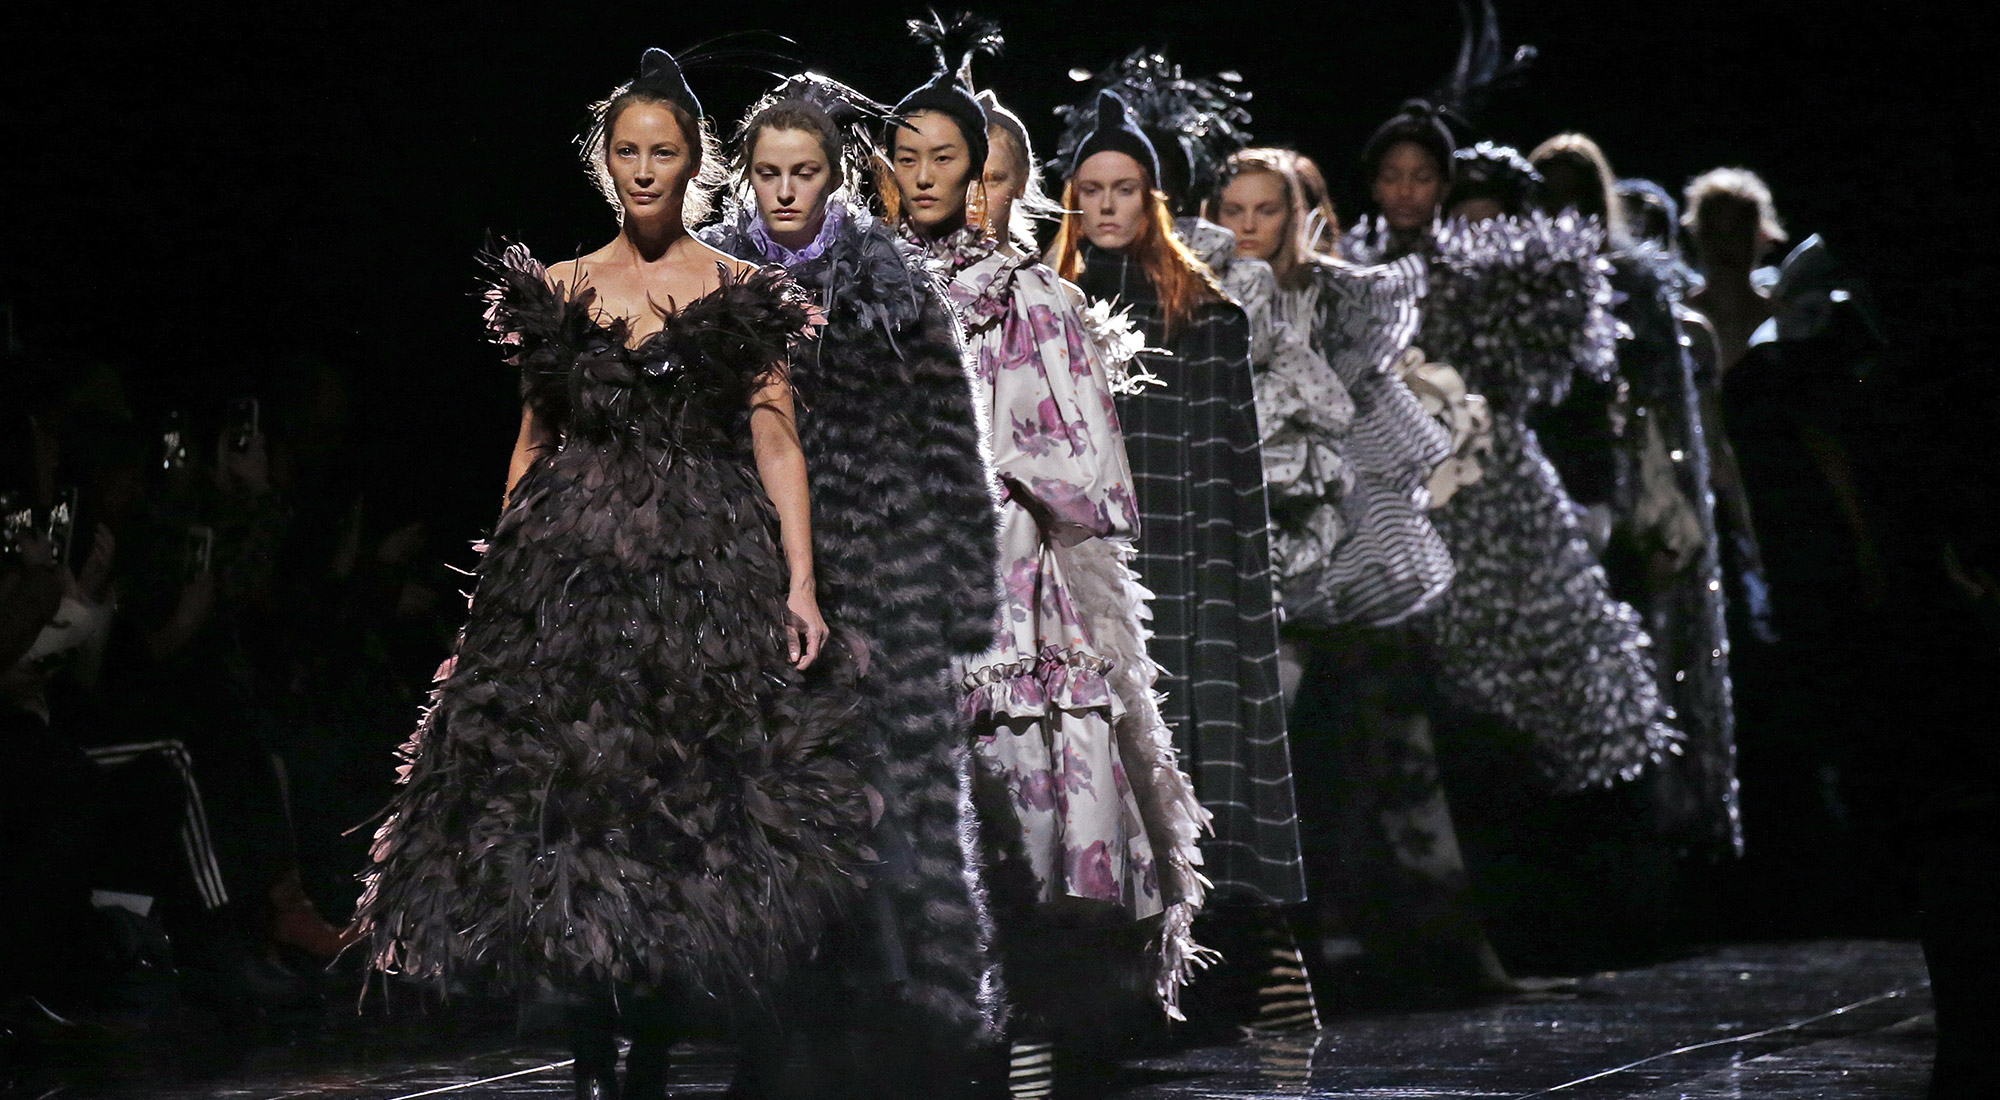 Marc Jacobs for Louis Vuitton at Paris fashion week